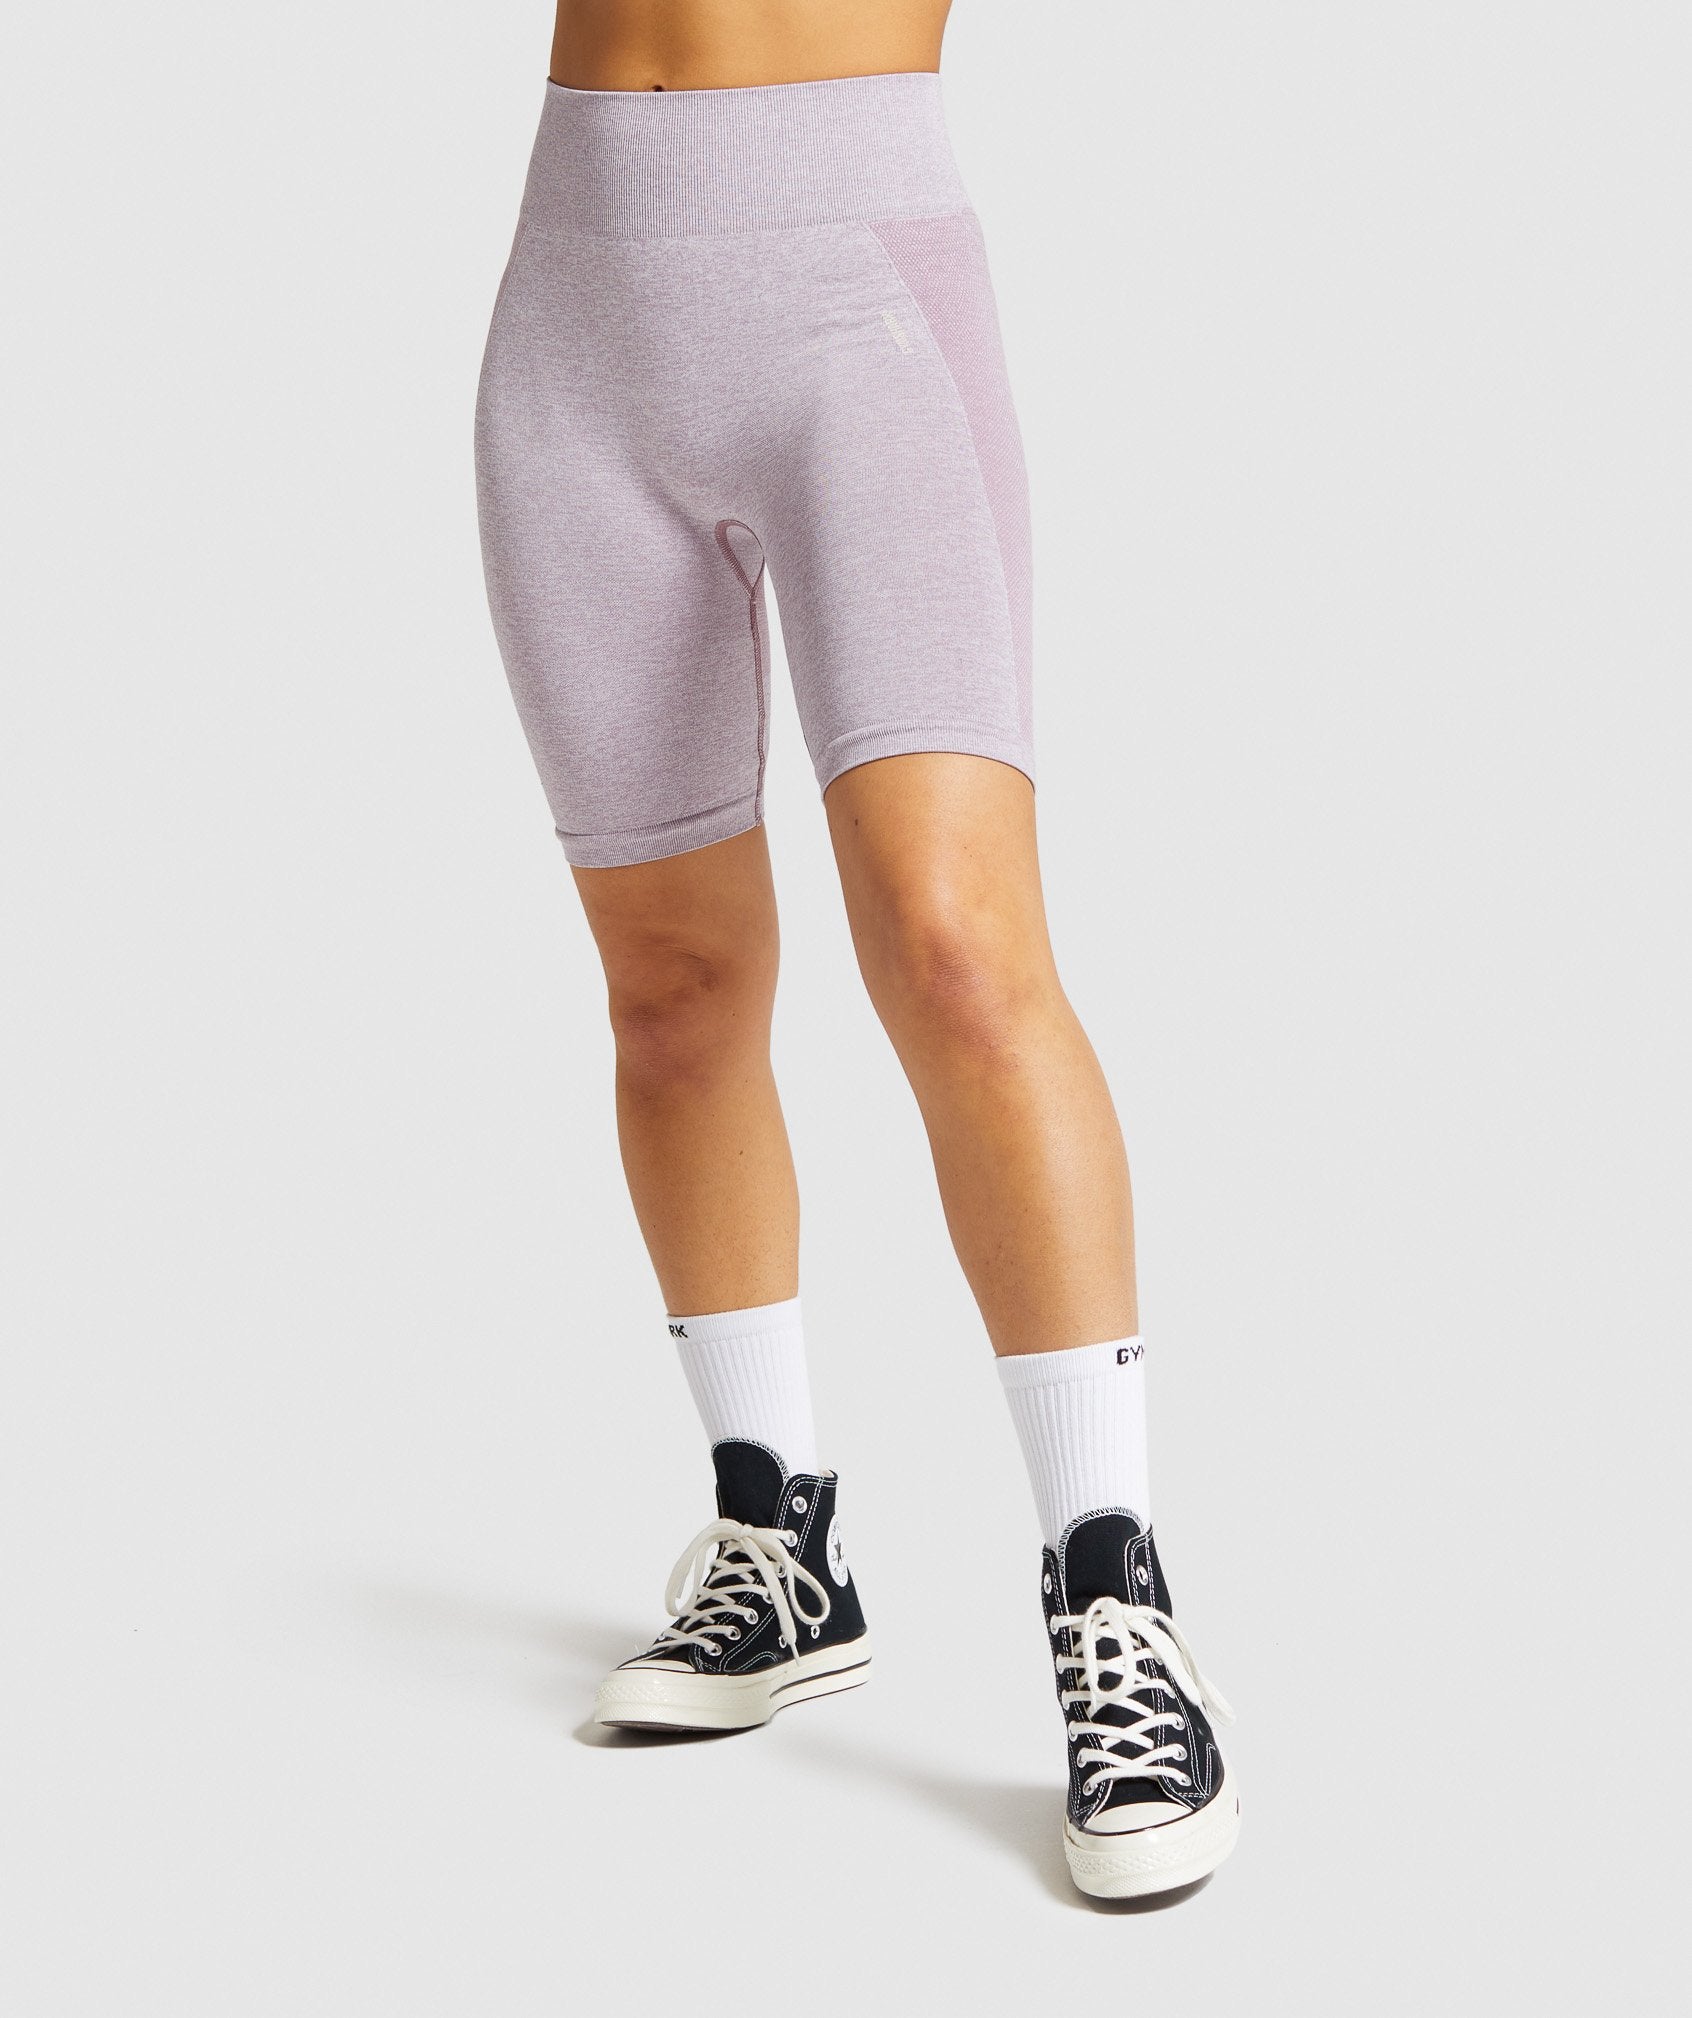 Gymshark Flex Shorts - Purple/Grey  Gymshark, Women's training shorts,  Purple grey